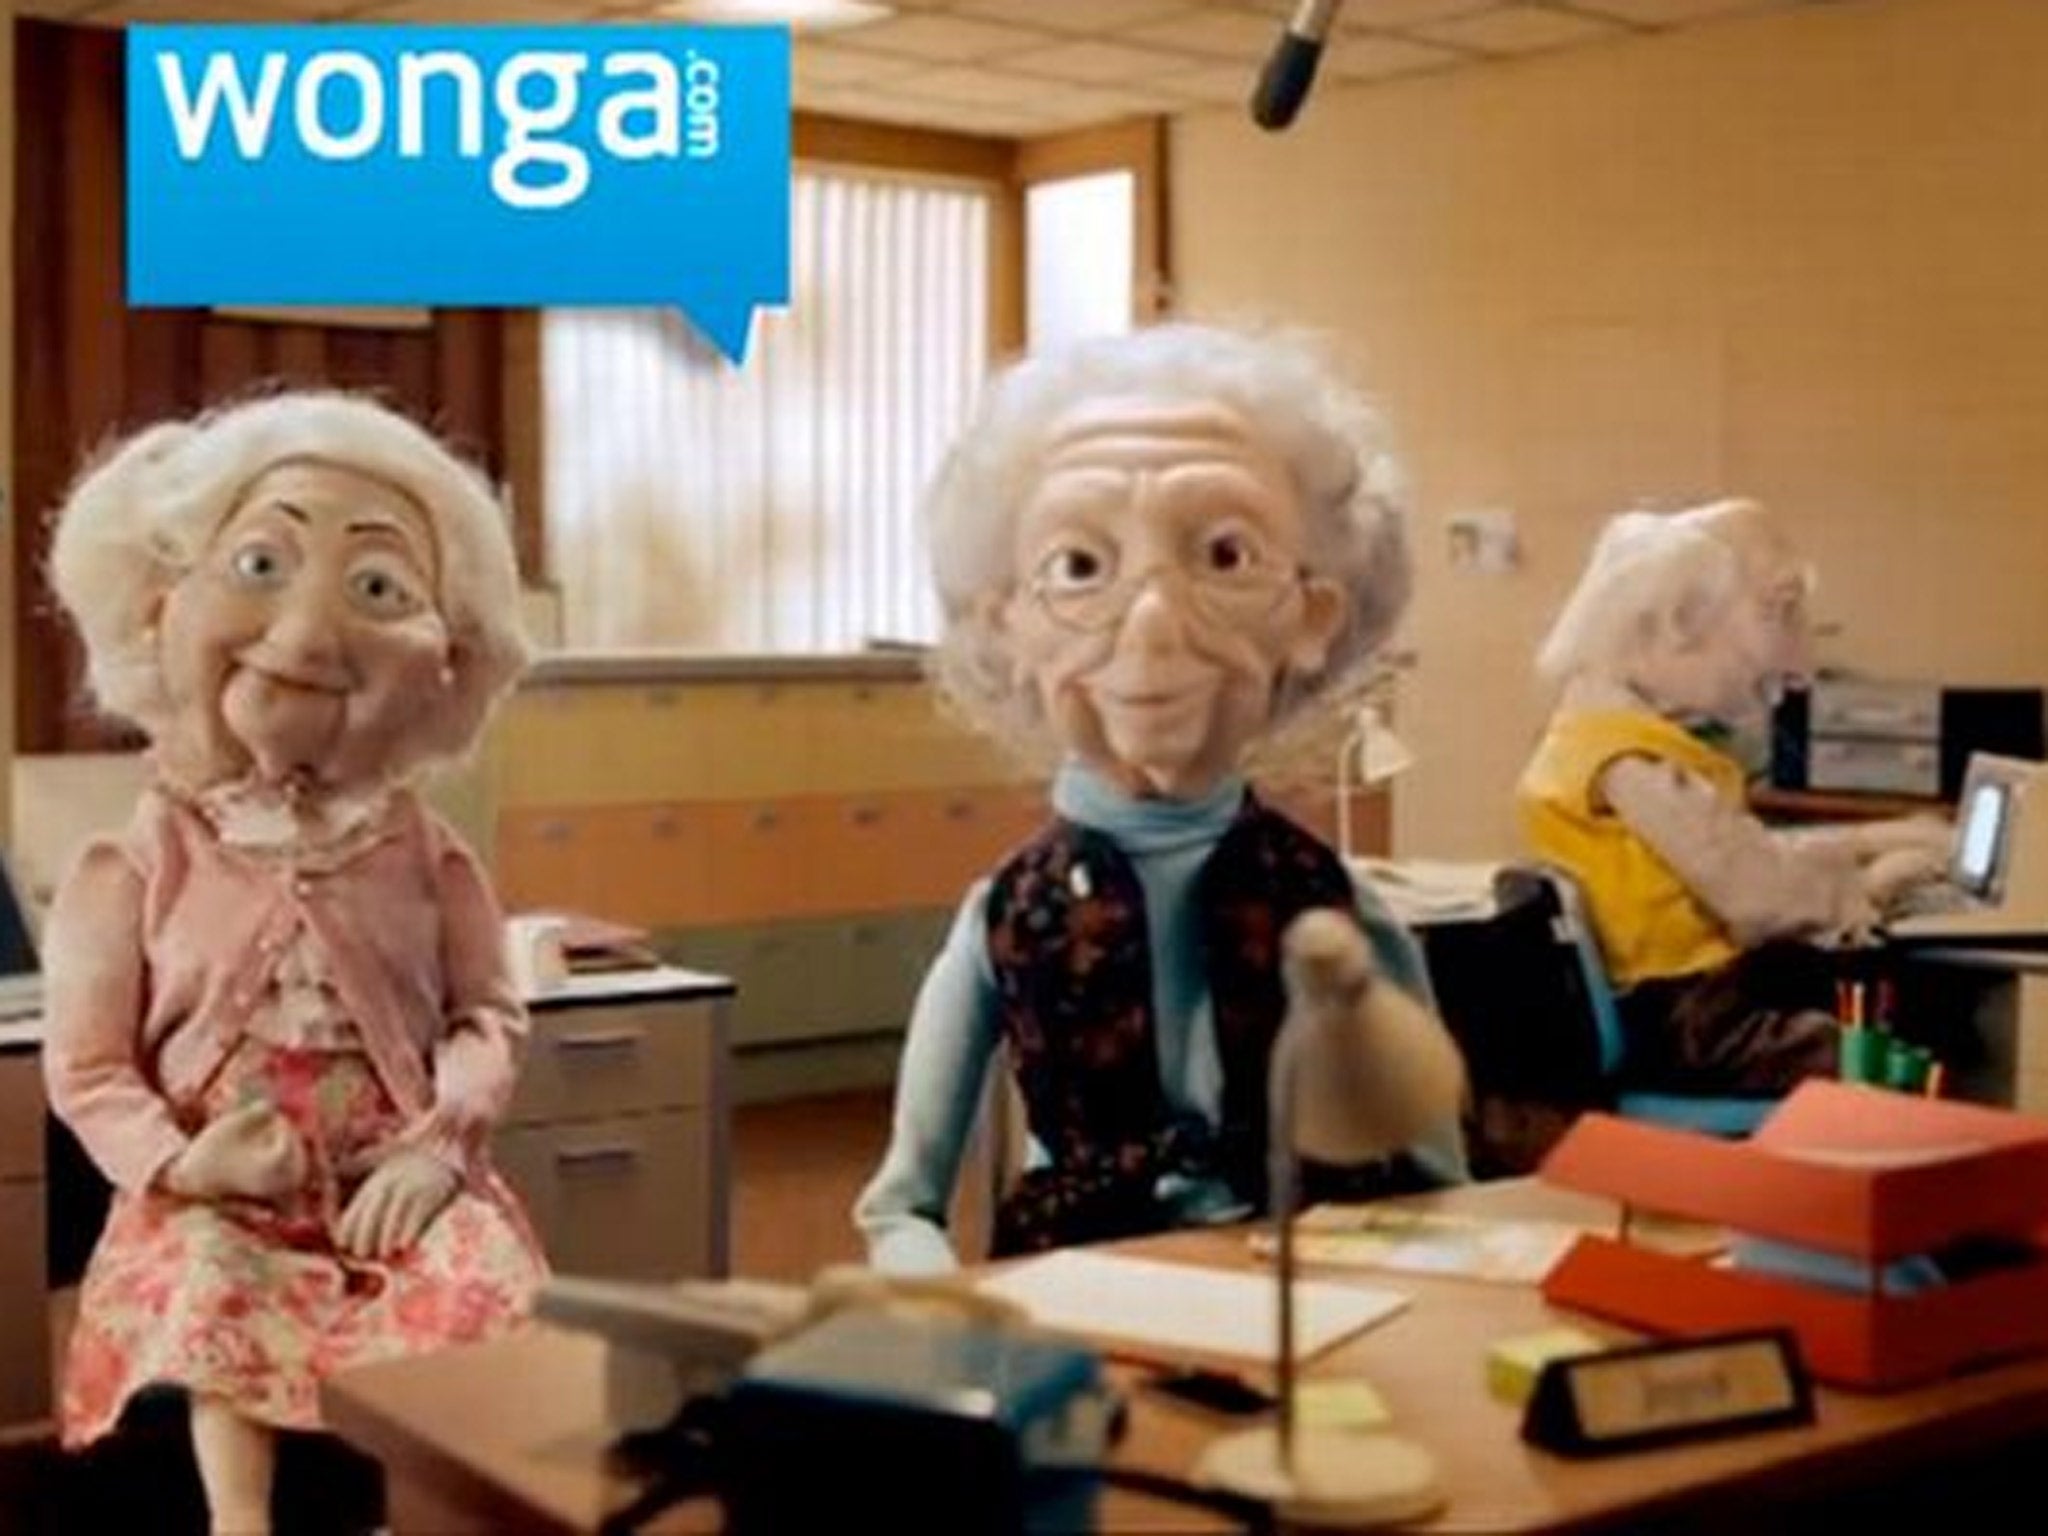 Wonga is Britain’s biggest payday lender